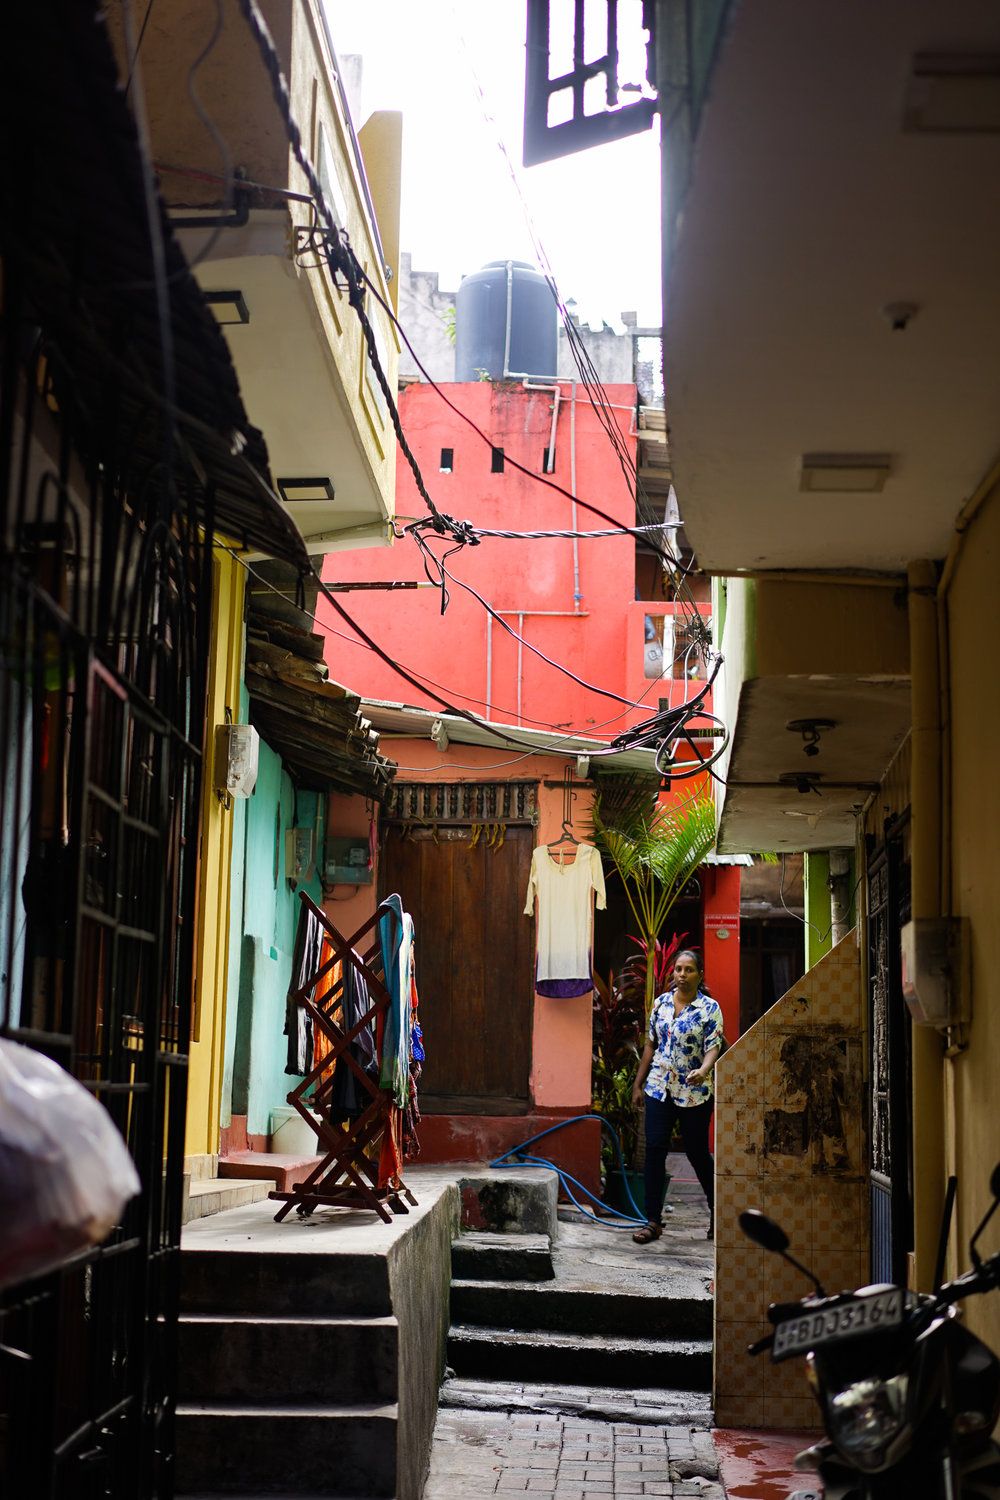  Colombo cultural walking tour - Pettah alleyways 